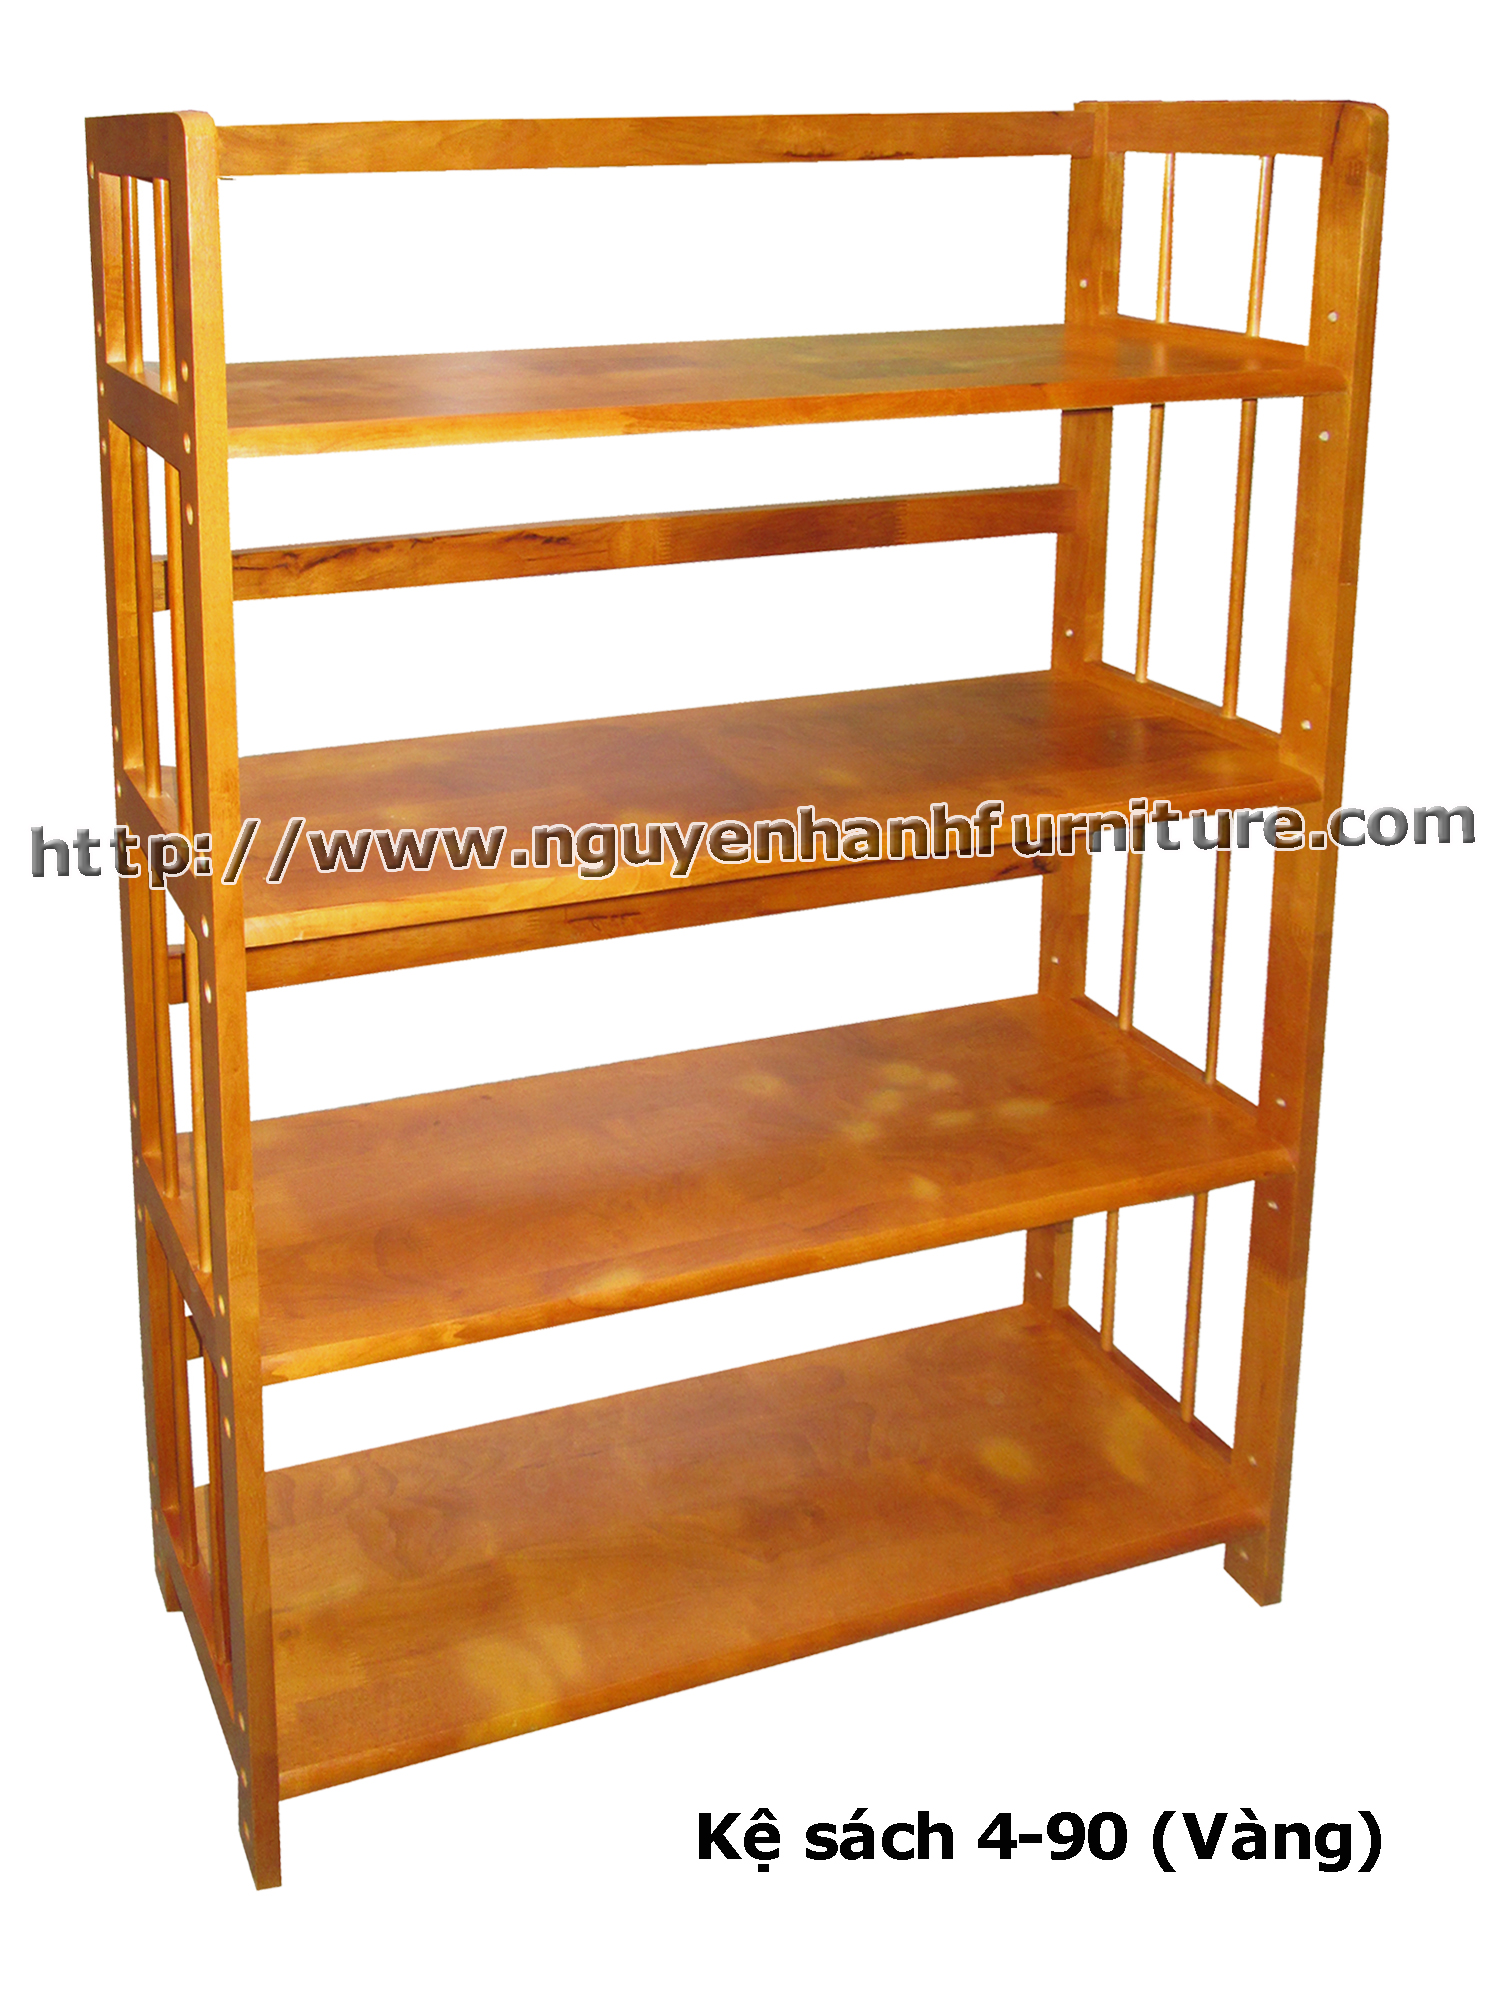 Name product: 4 storey Adjustable Bookshelf 90 (Yellow) - Dimensions: 80 x 28 x 120 (H) - Description: Wood natural rubber